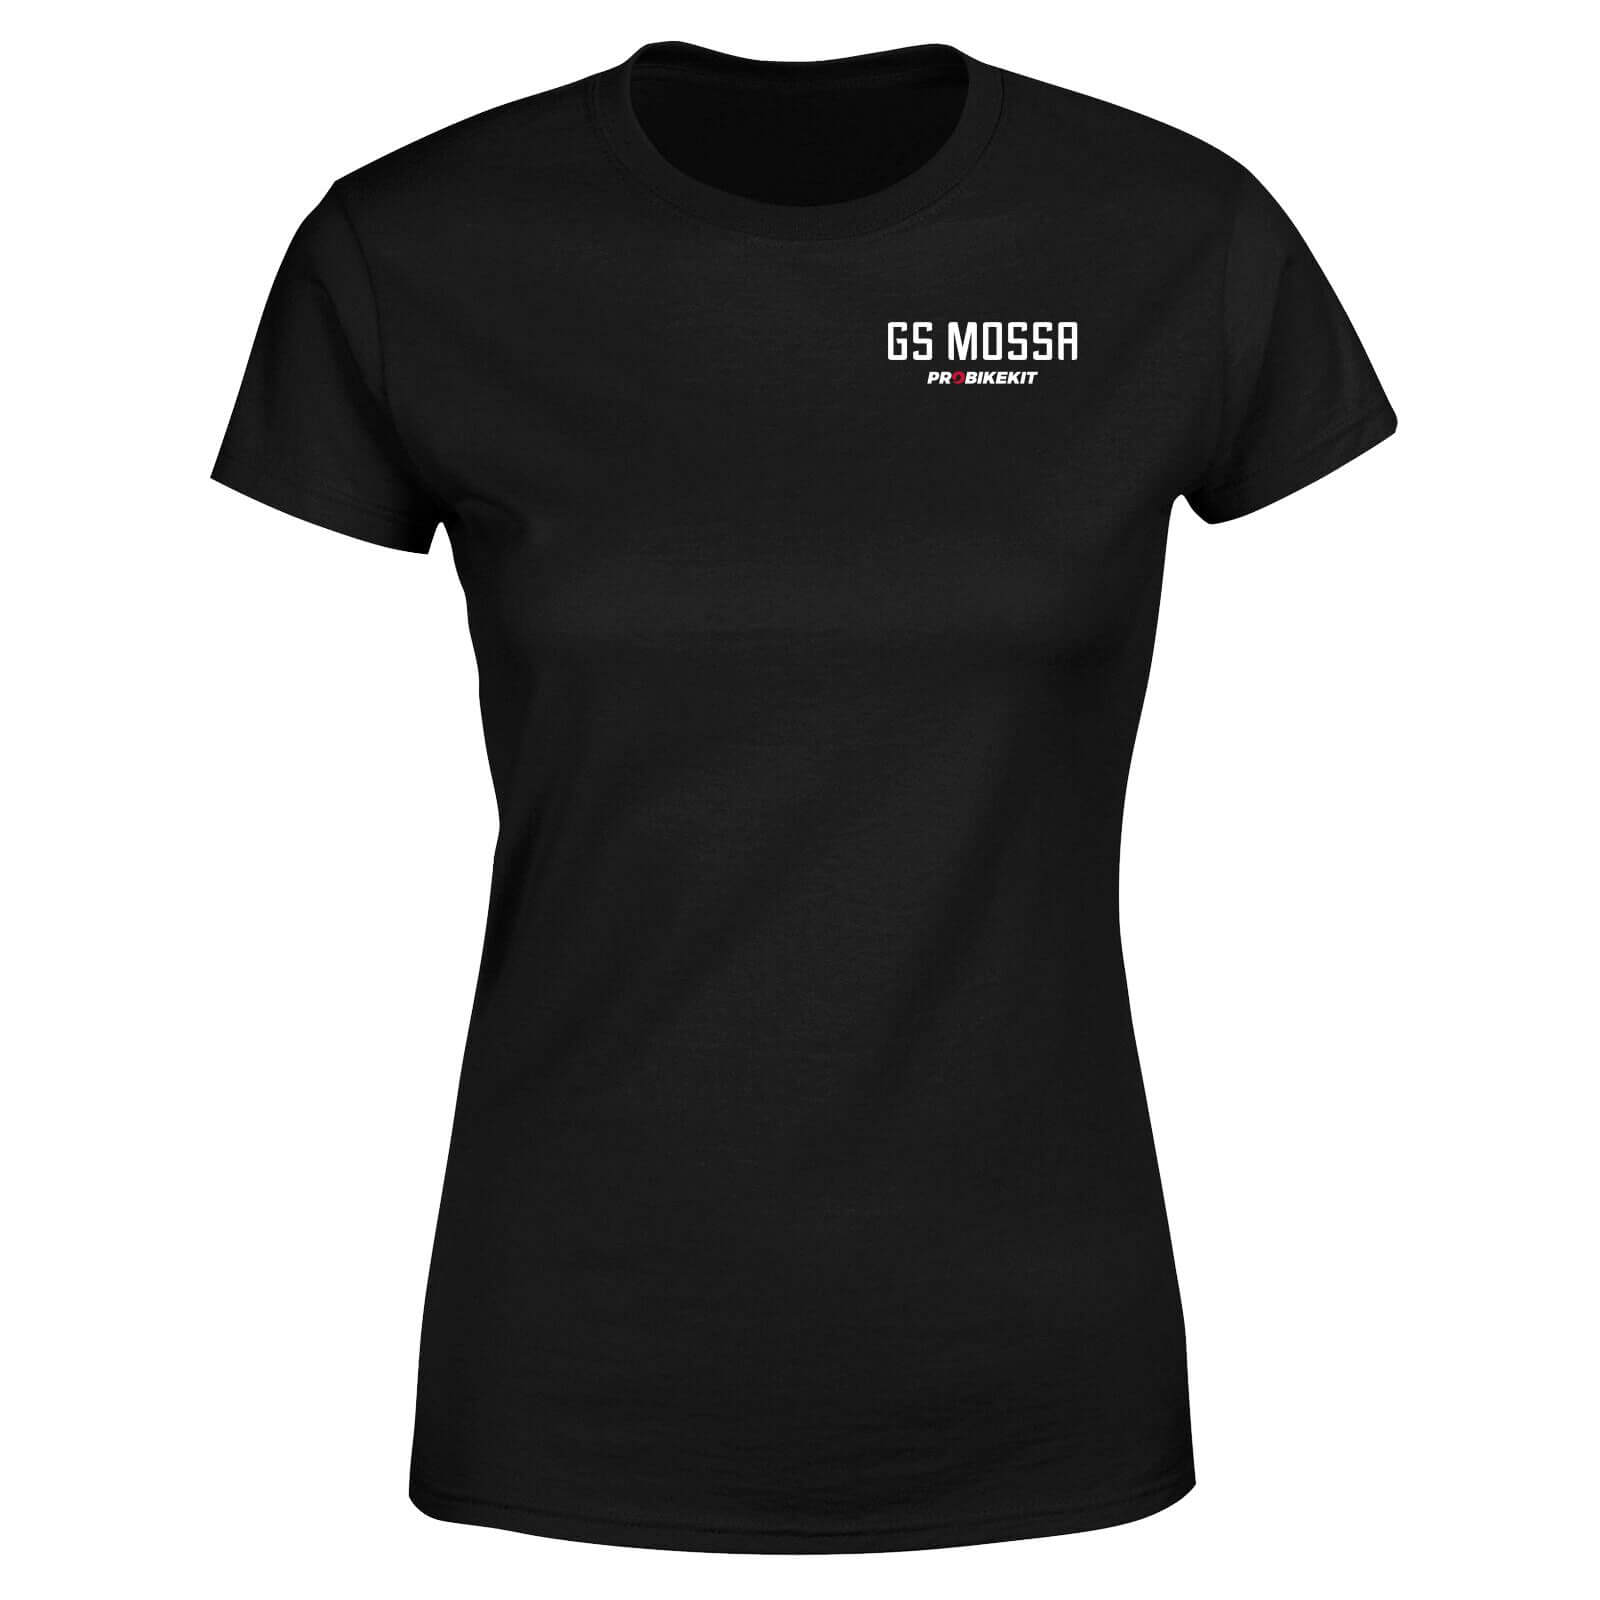 PBK GS Mossa Pocket Print Aqua Wave Women's T-Shirt - Black - XXL - Black